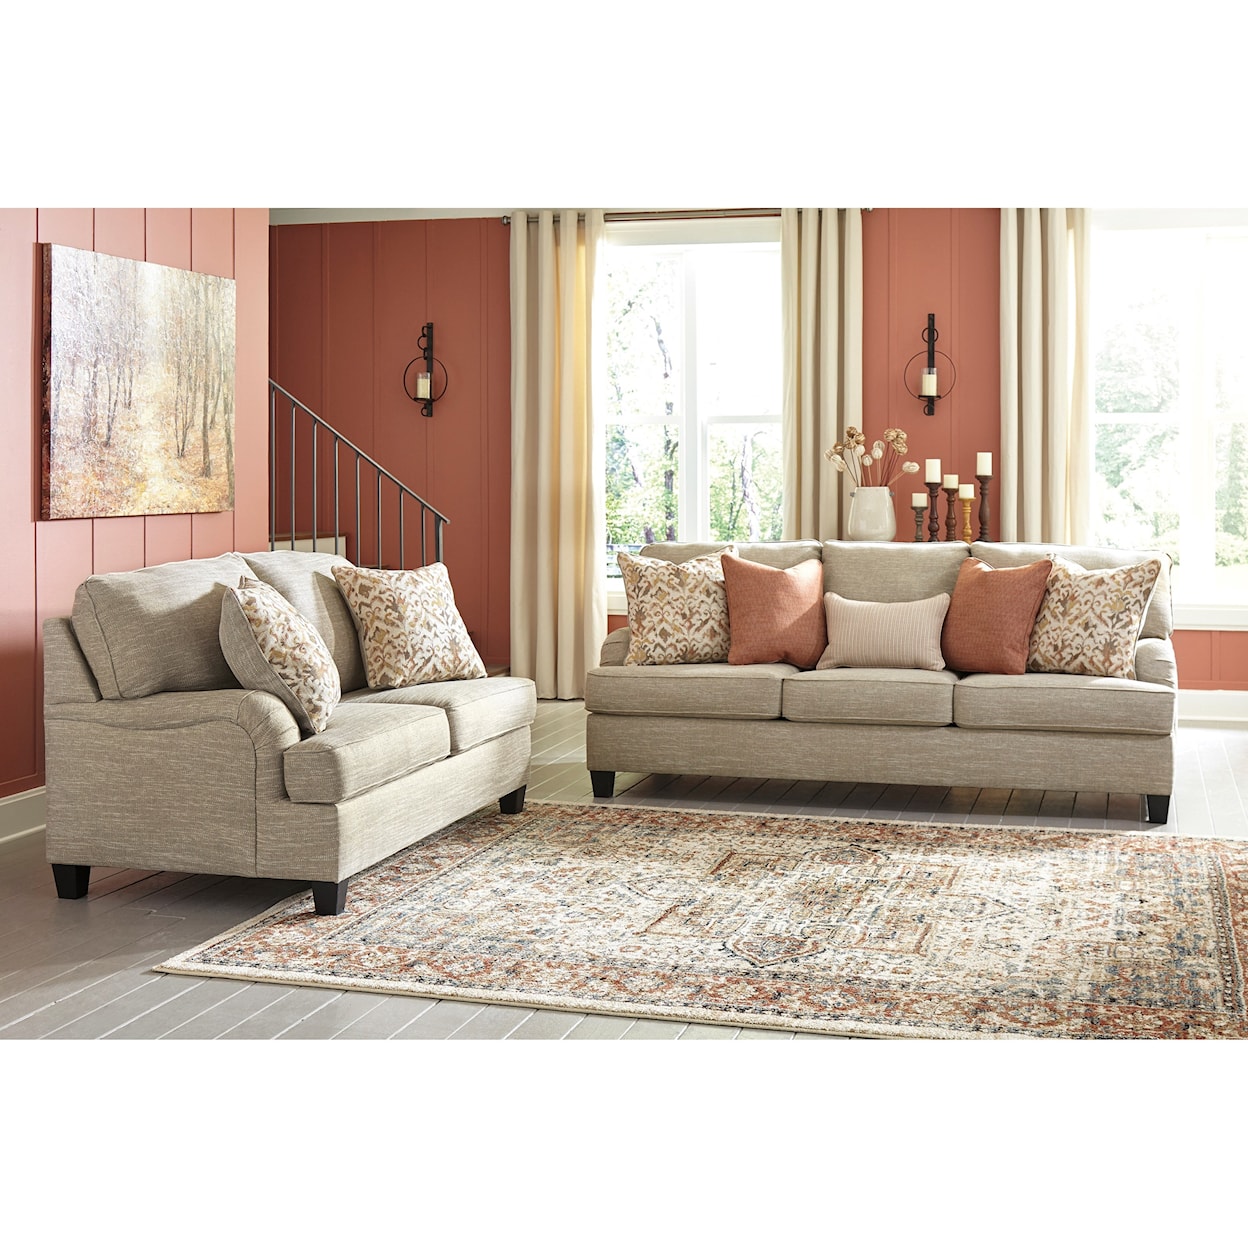 Ashley Furniture Signature Design Almanza Living Room Group